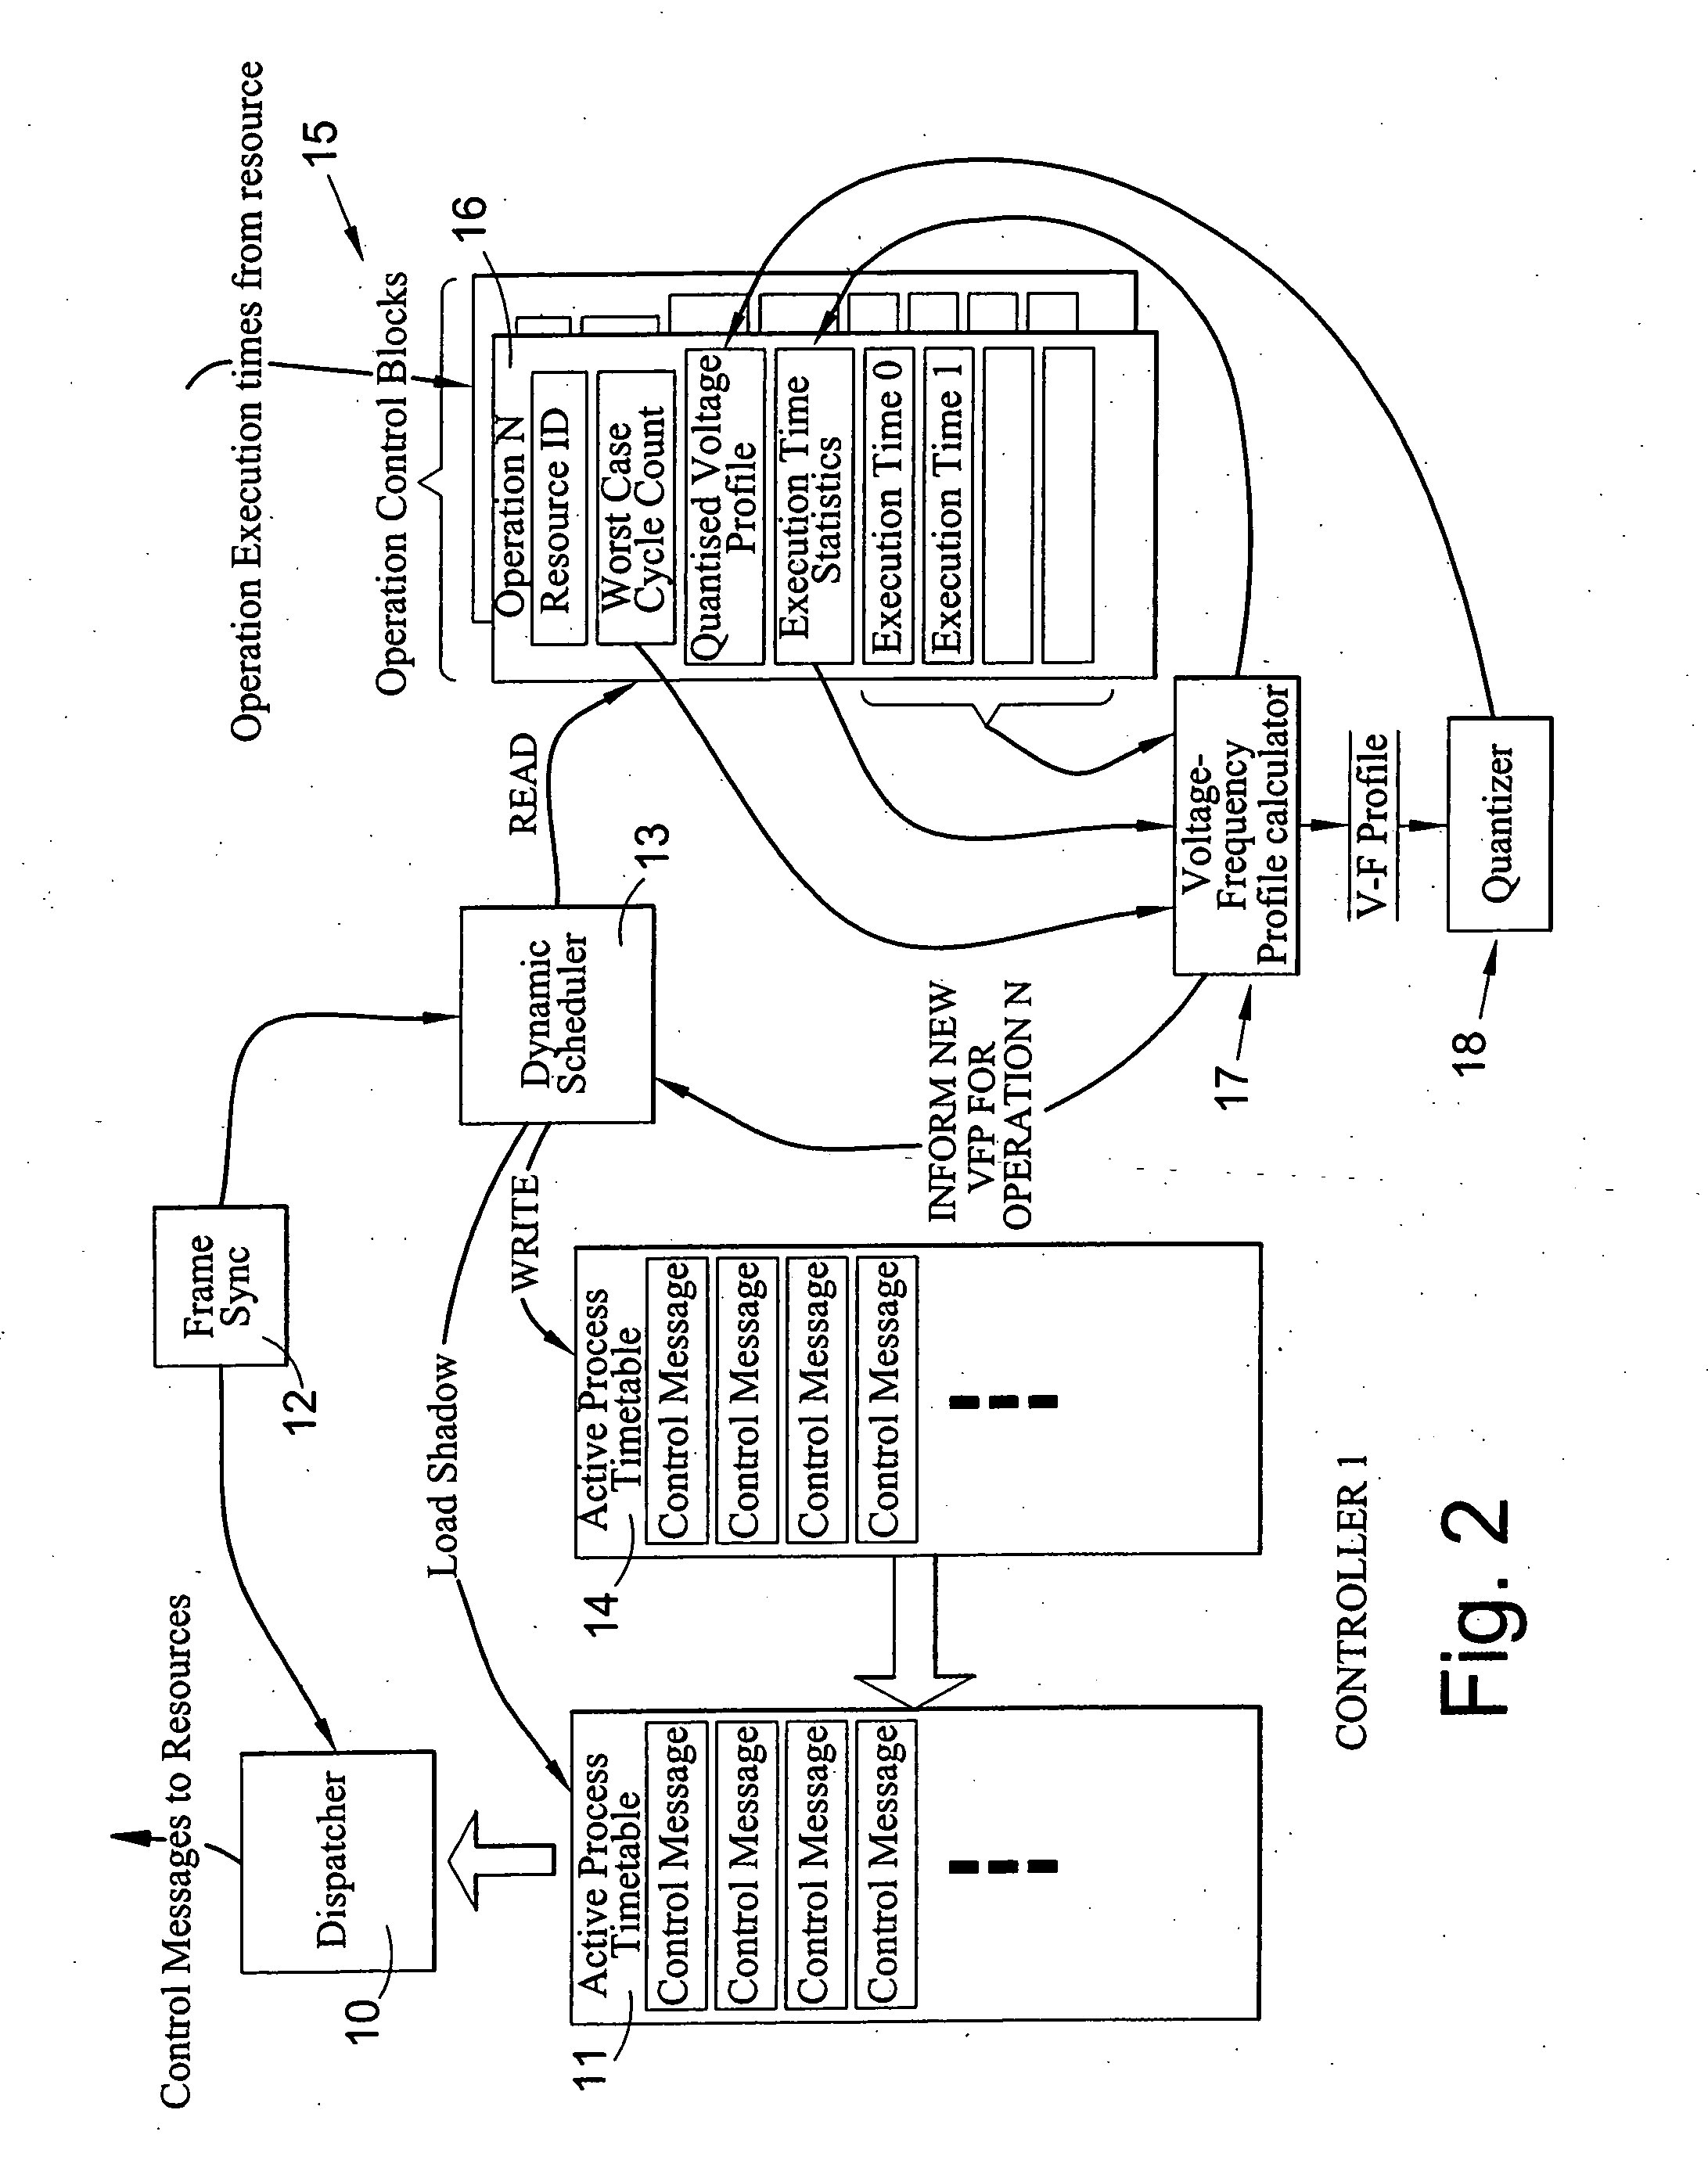 Controller for processing apparatus